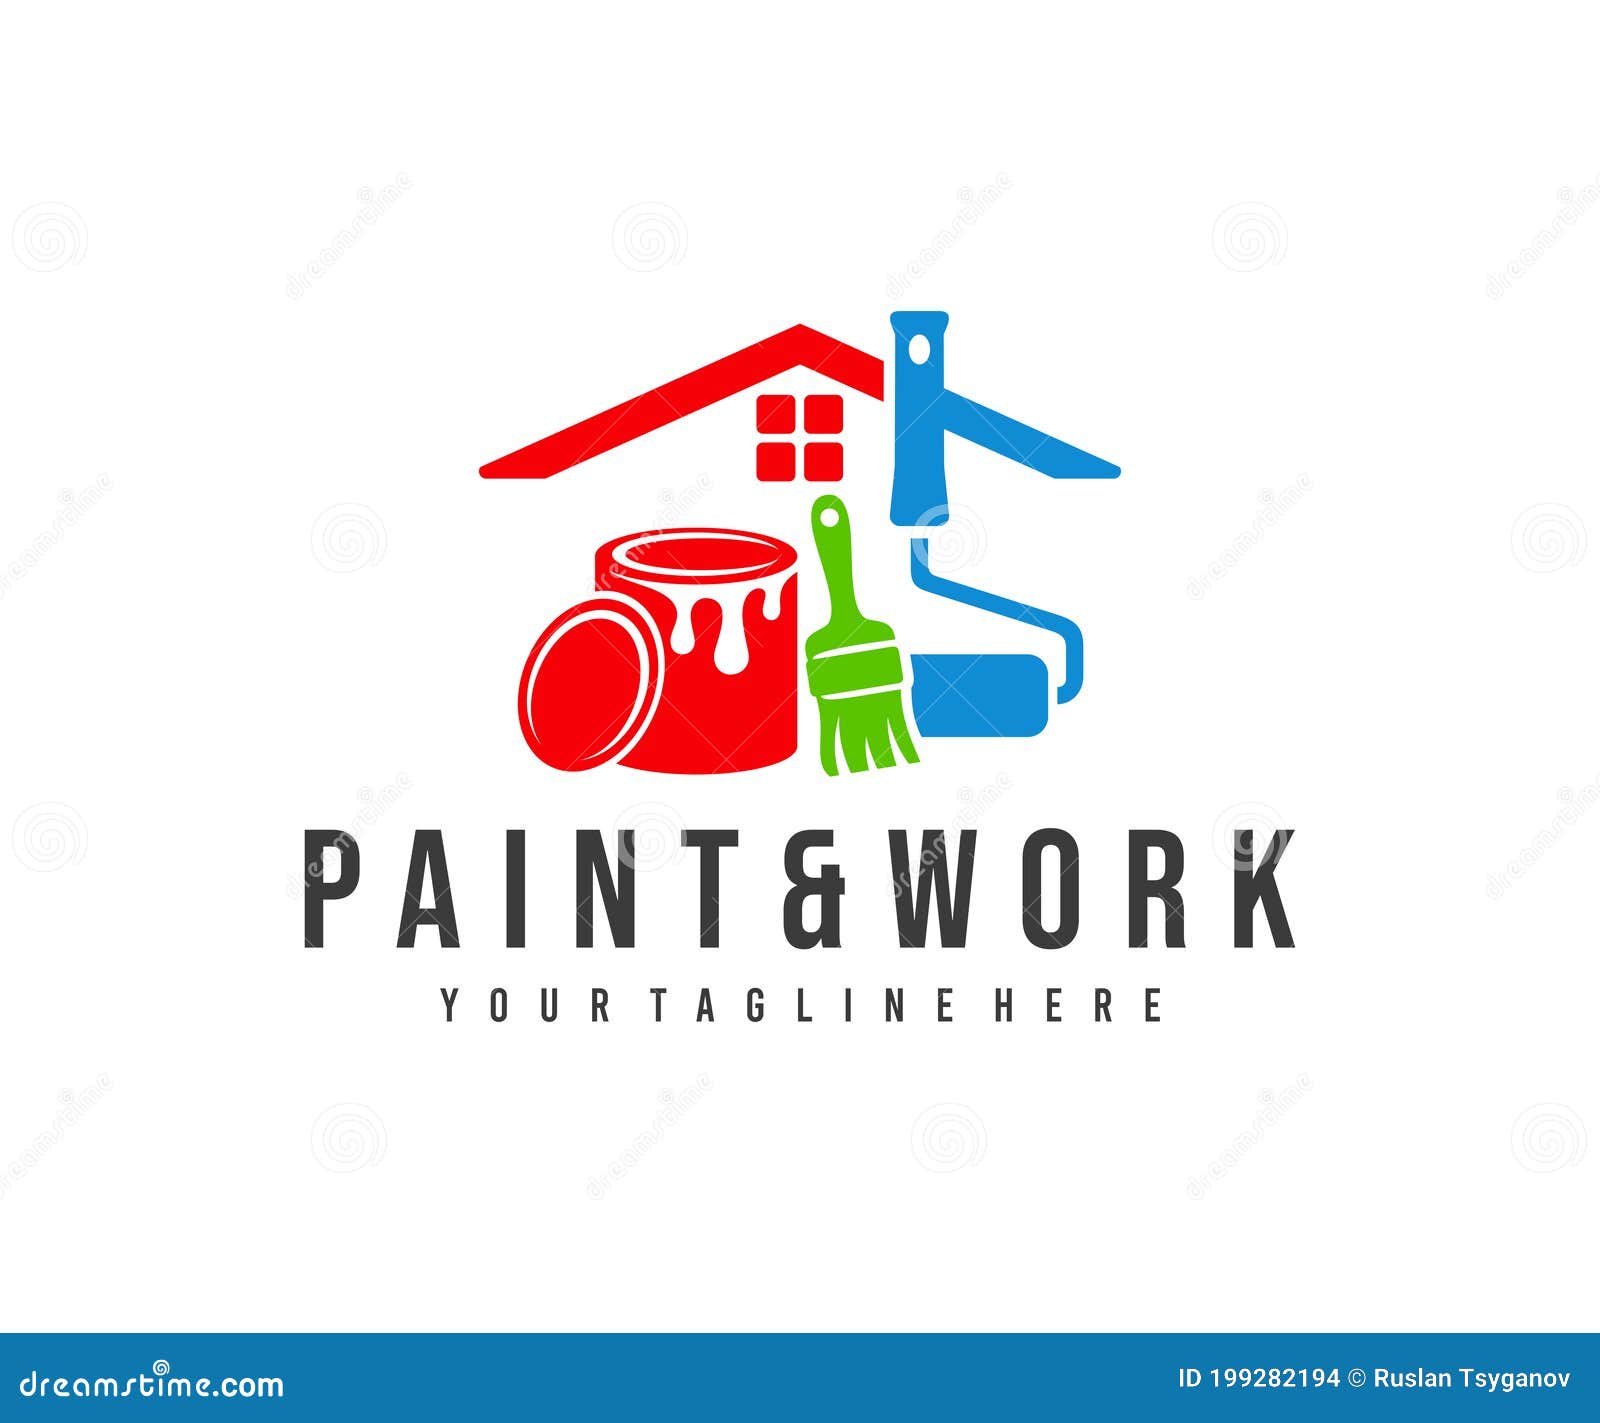 painter logo ideas 7